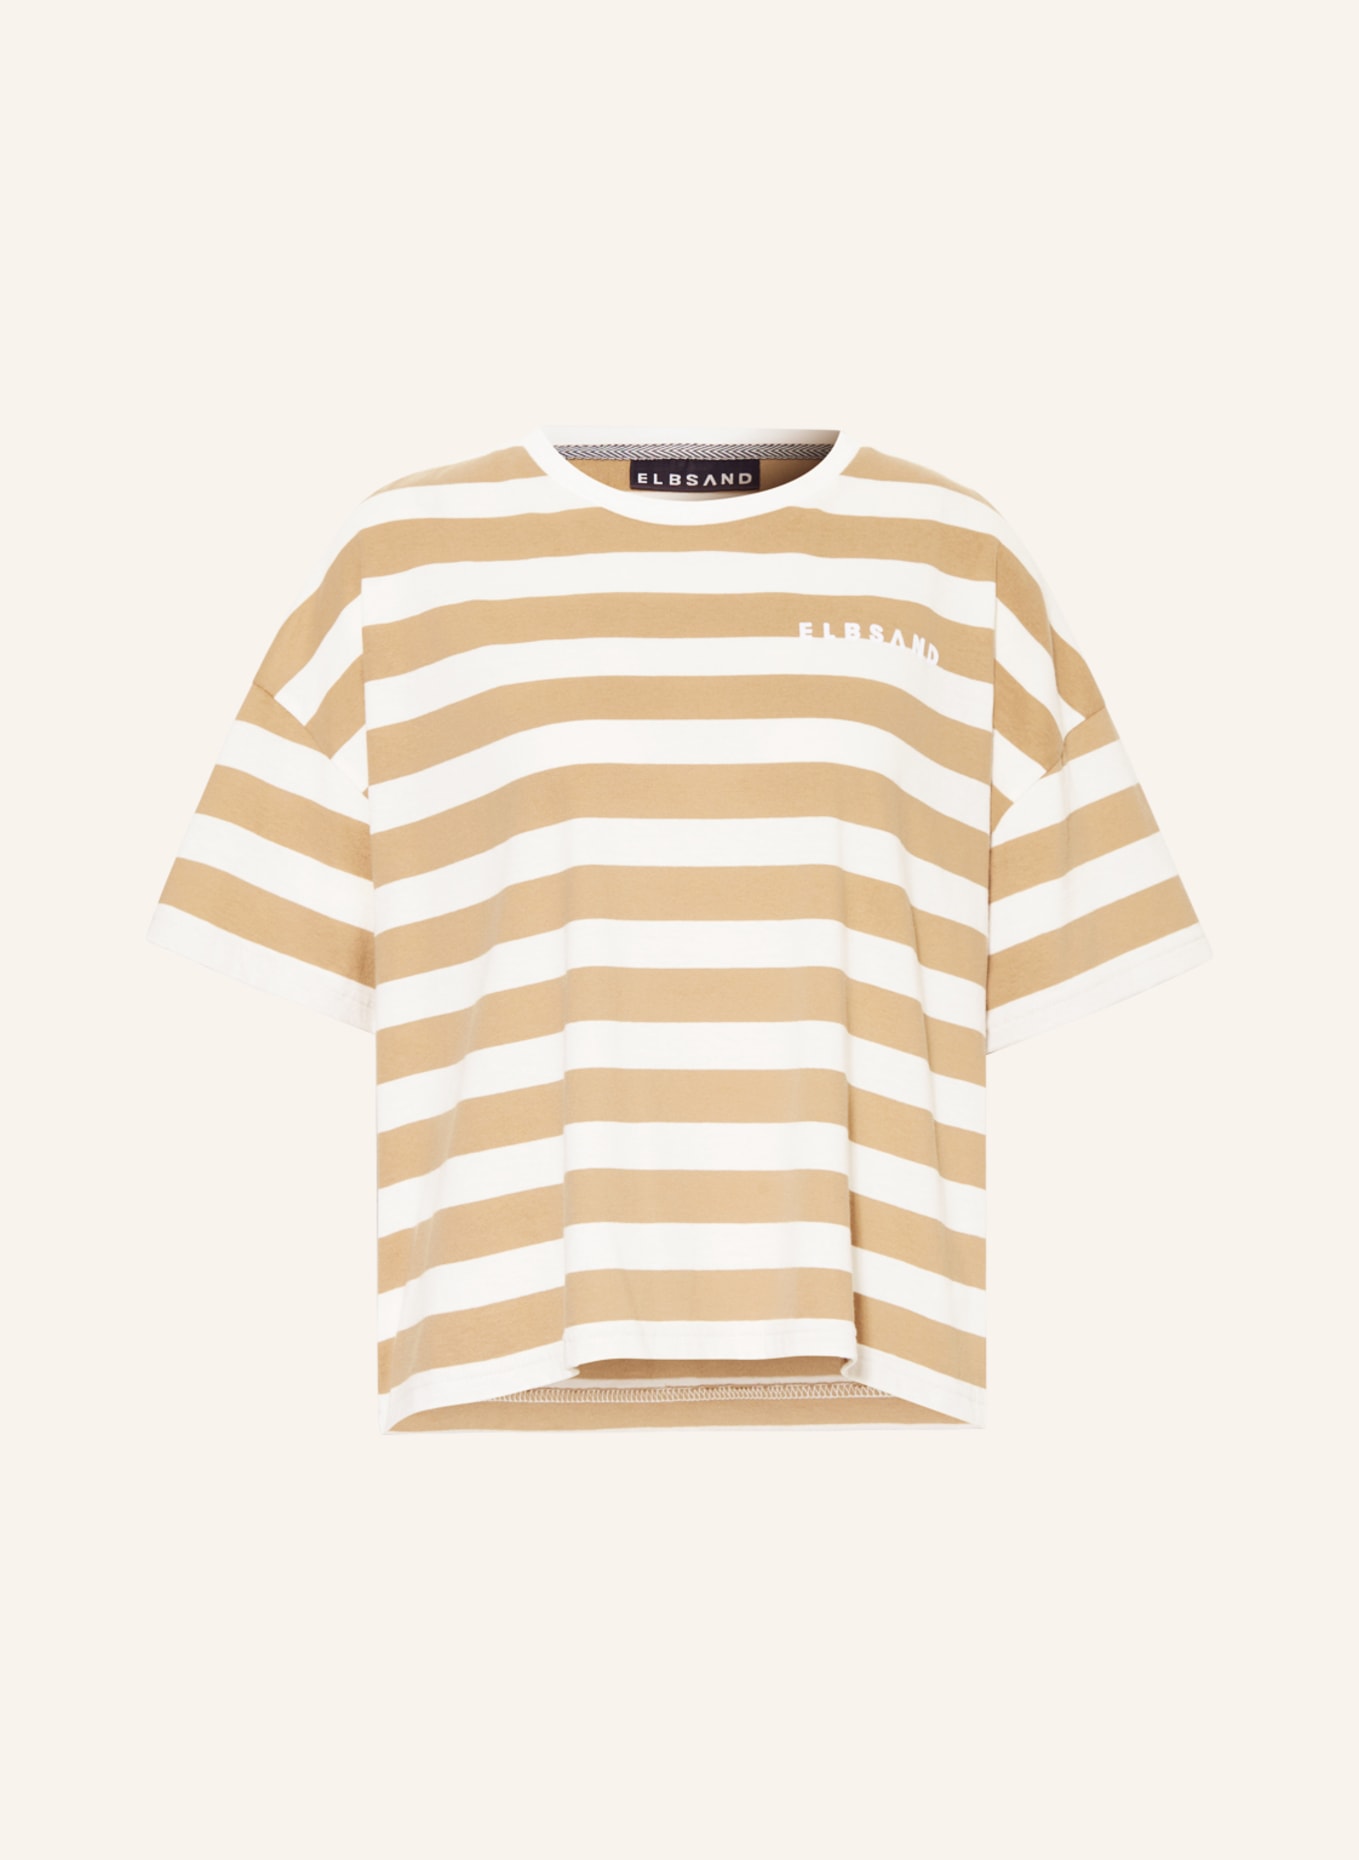 ELBSAND T-Shirt DIMA, Farbe: HELLBRAUN/ CREME (Bild 1)